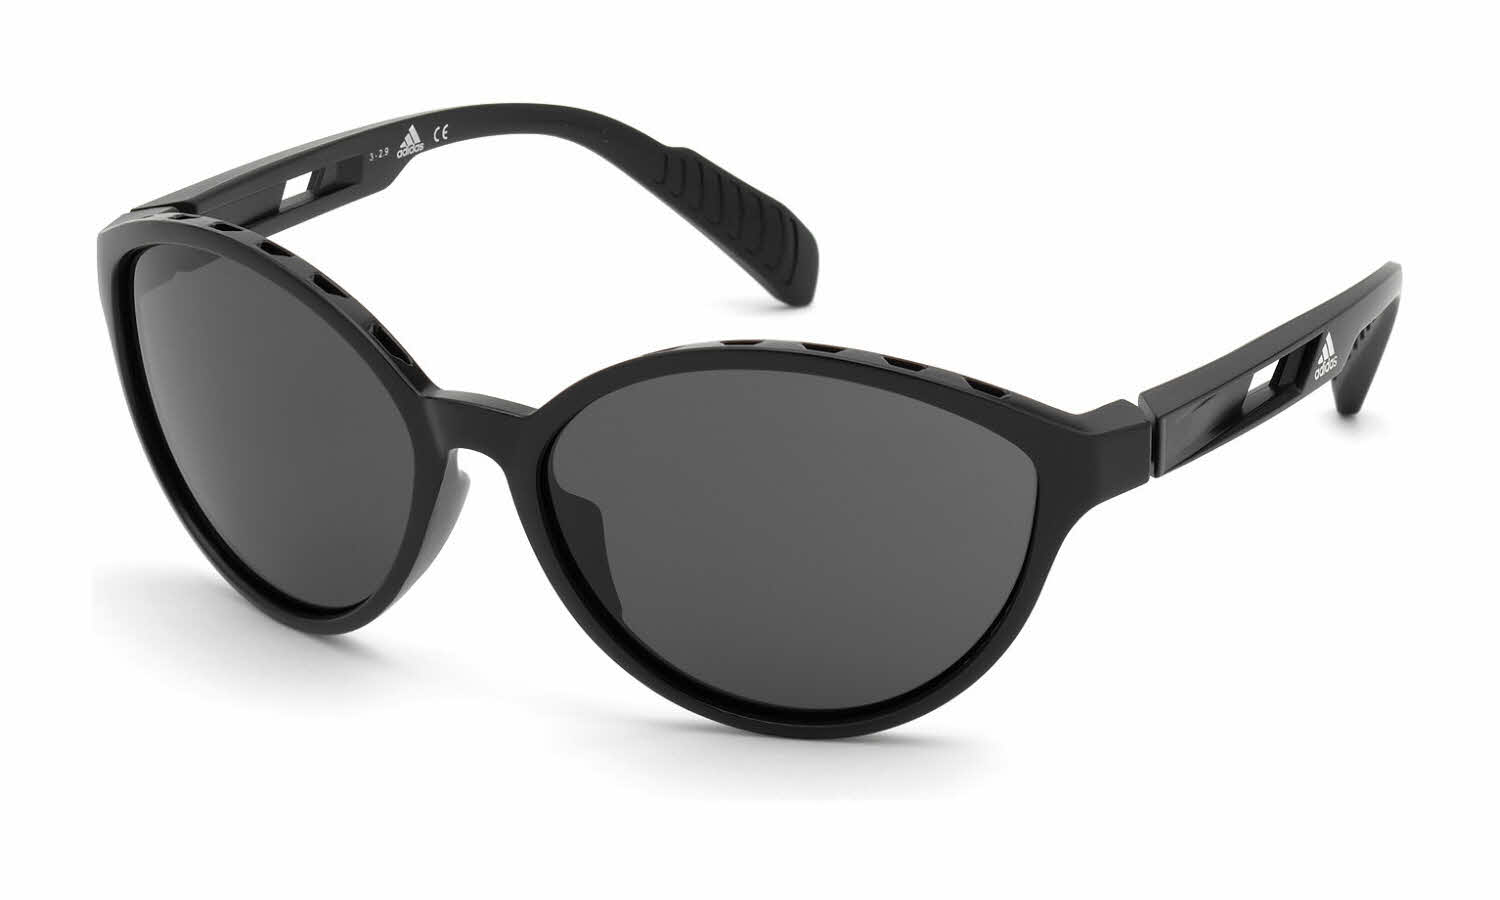 Adidas SP0012 Sunglasses